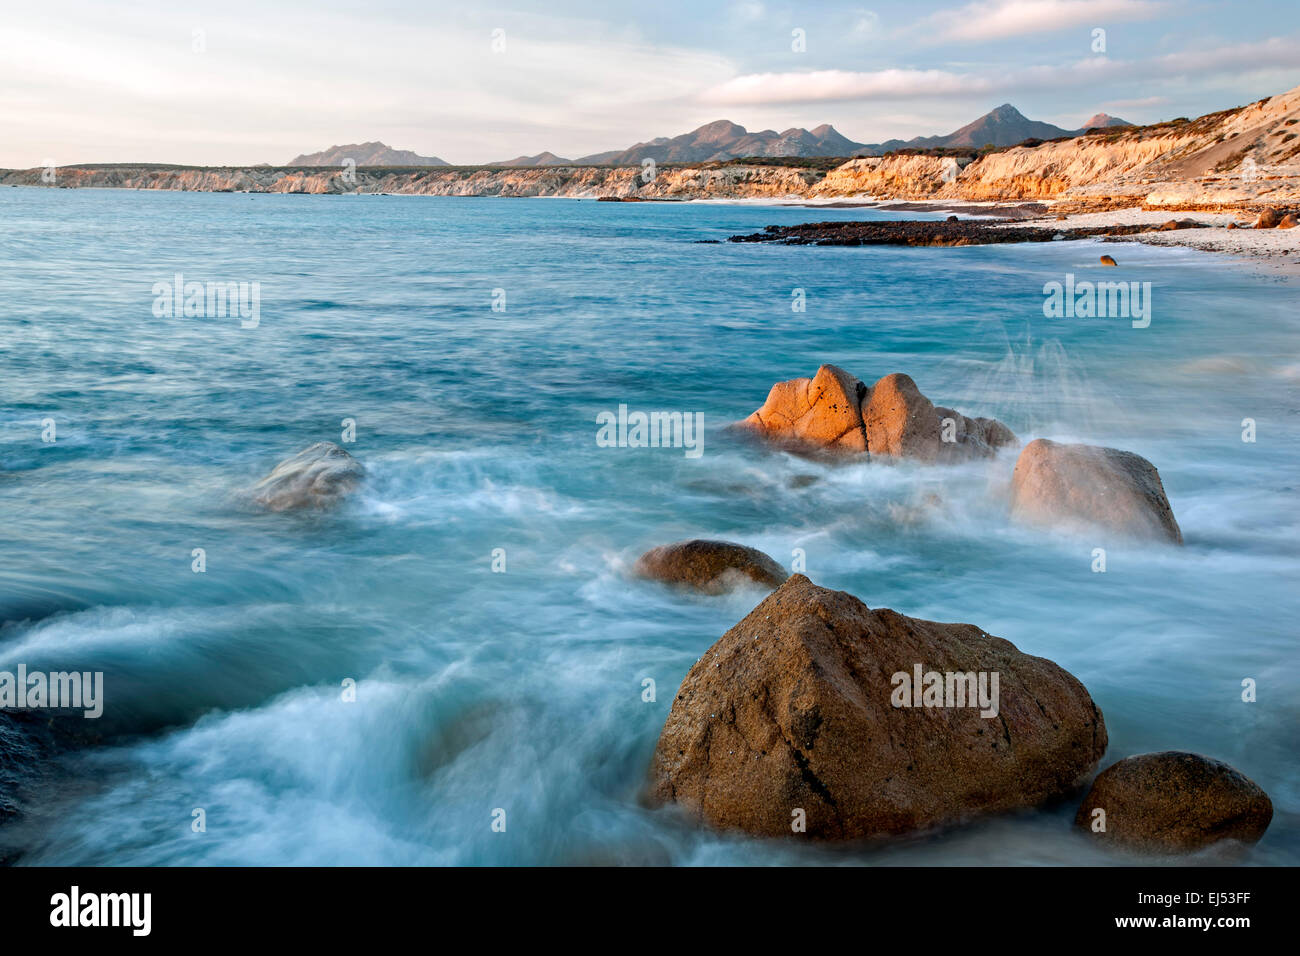 Water swirling around rocks, Cabo Pulmo (on Sea of Cortez), Baja California Sur, Mexico Stock Photo